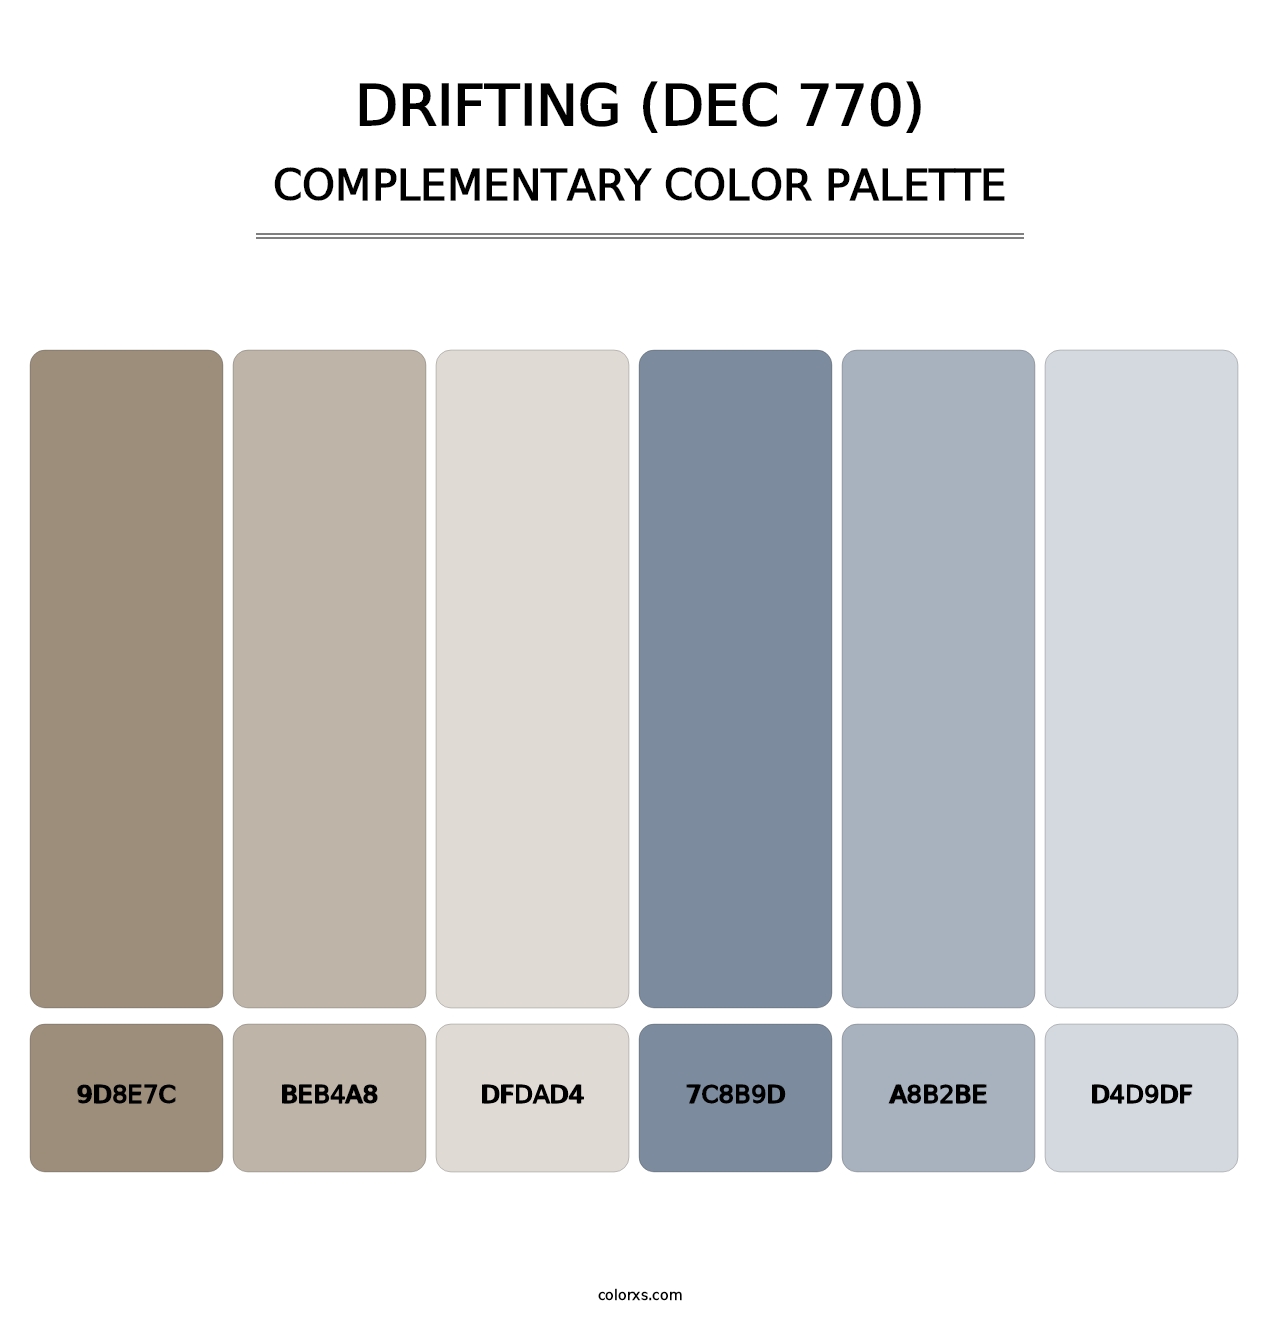 Drifting (DEC 770) - Complementary Color Palette